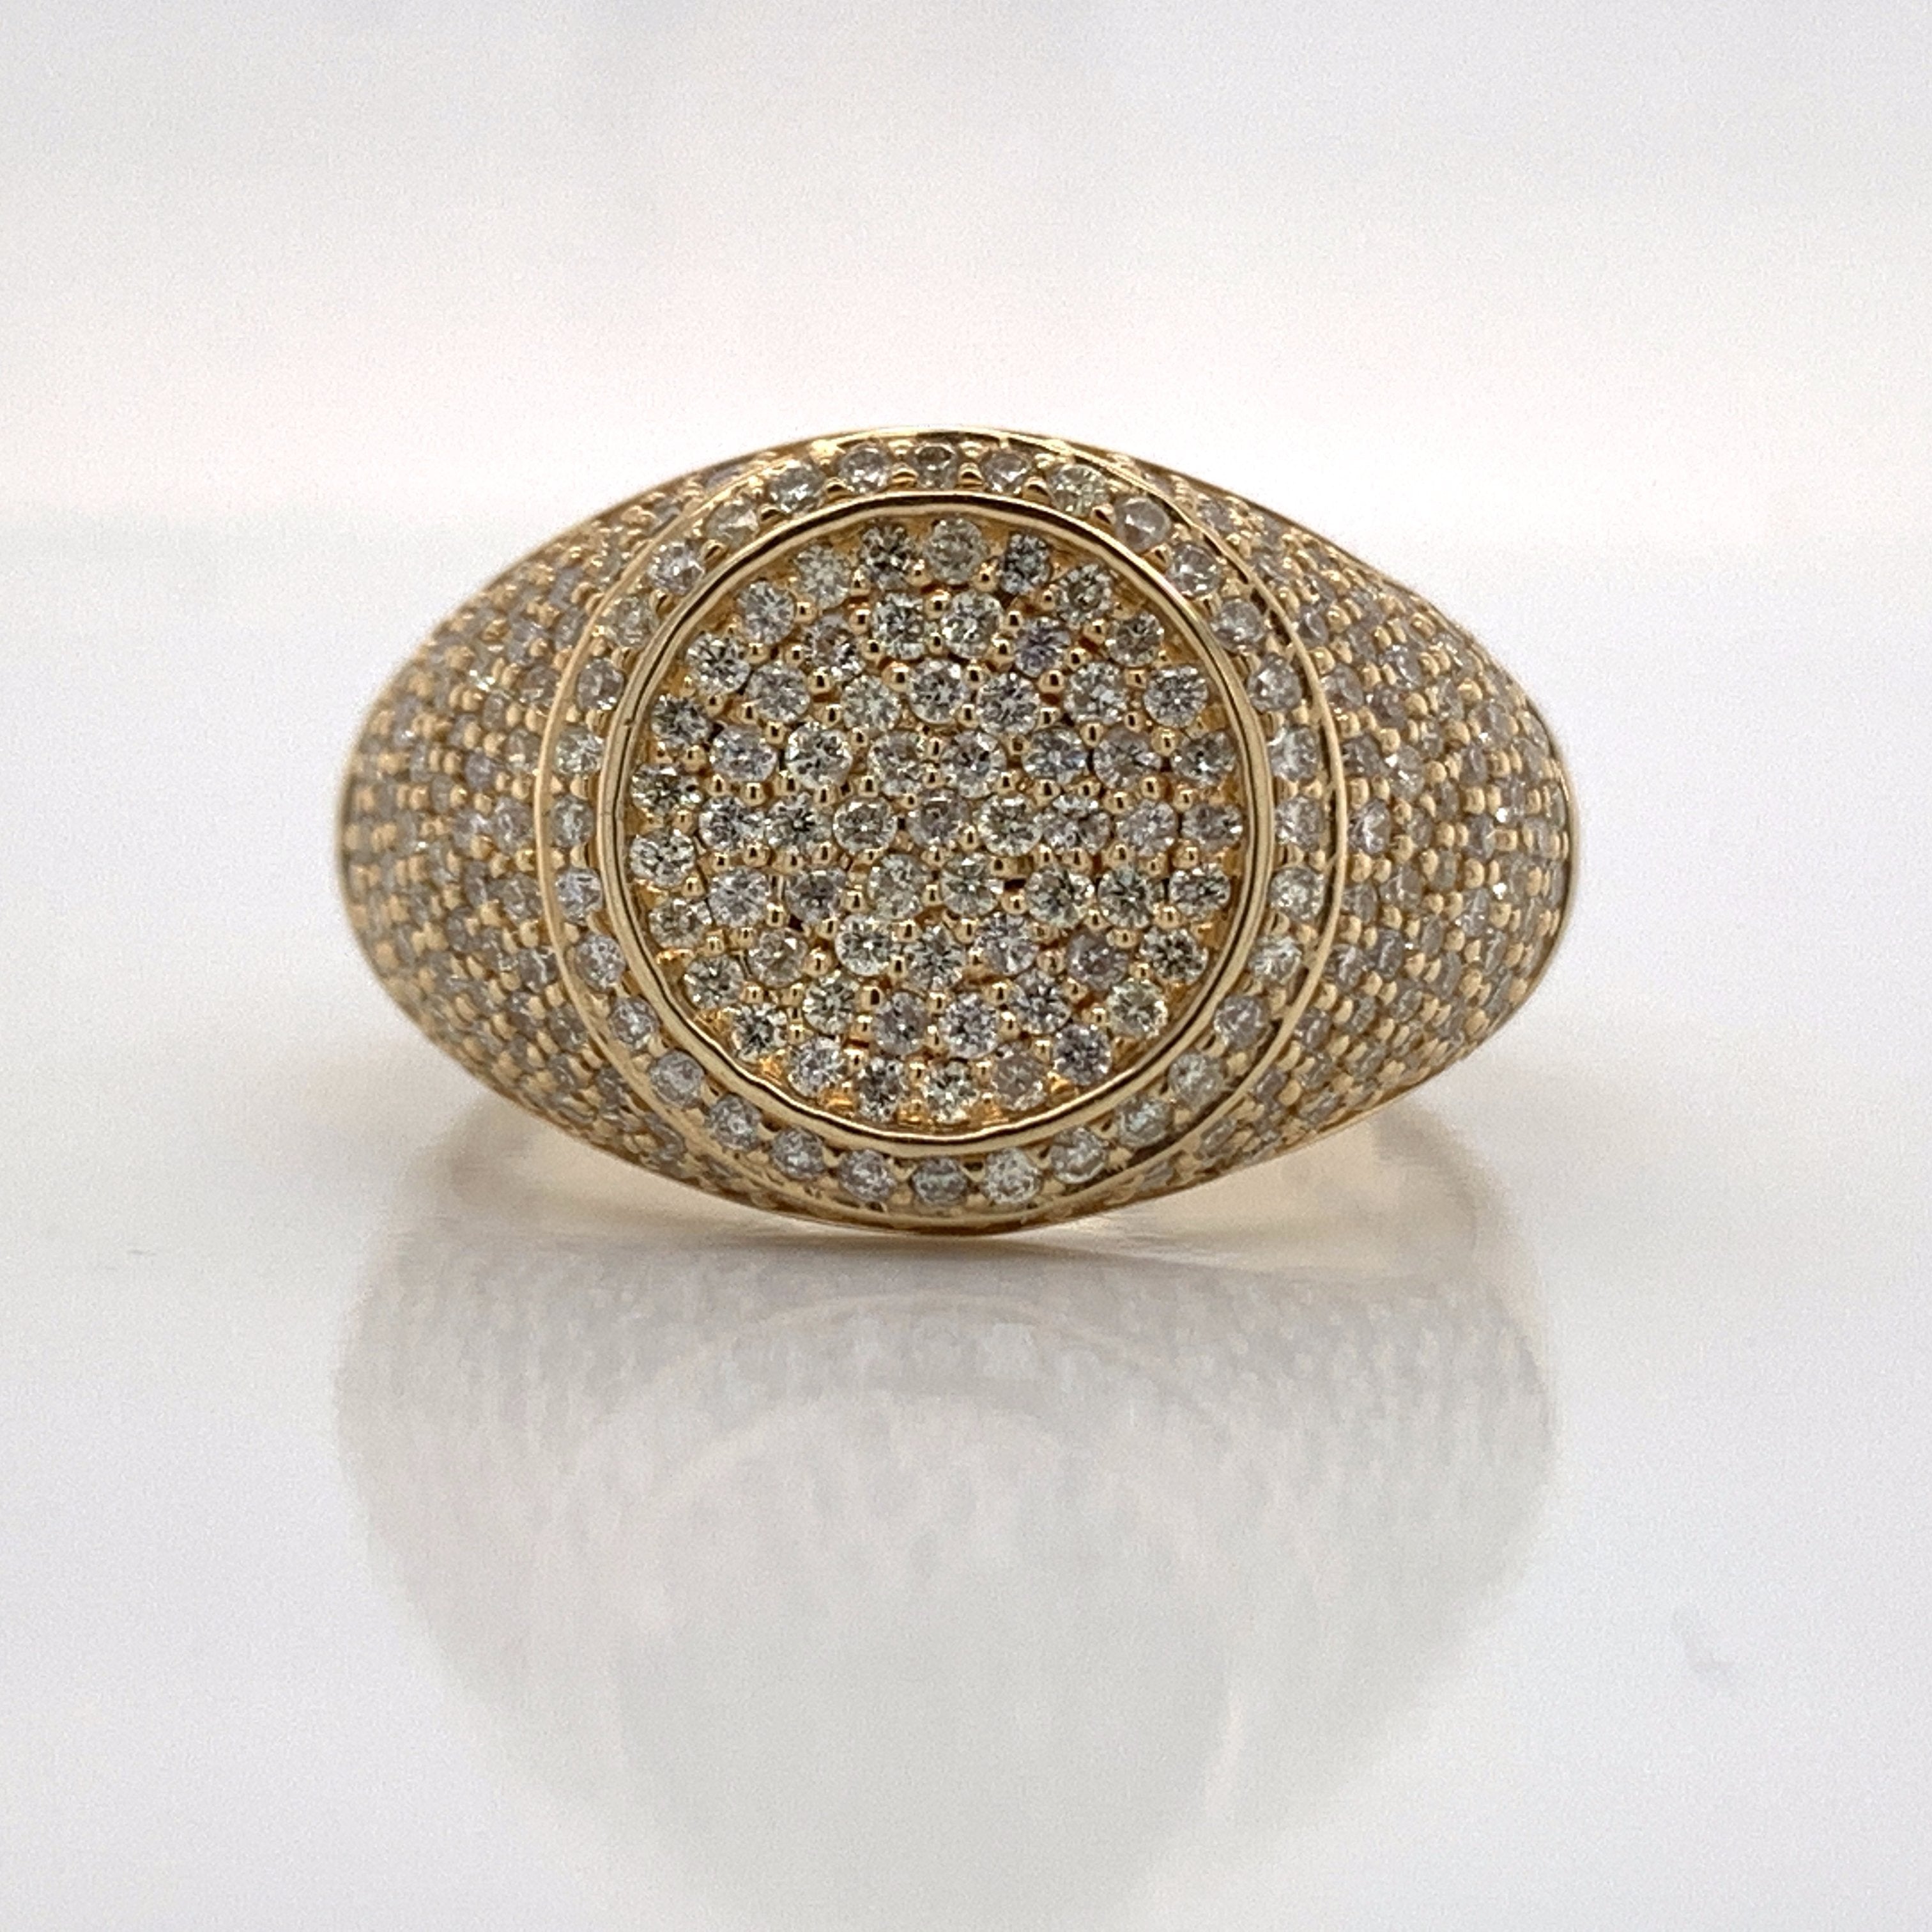 1.50 CT. Diamond Ring in 14K Gold - White Carat Diamonds 